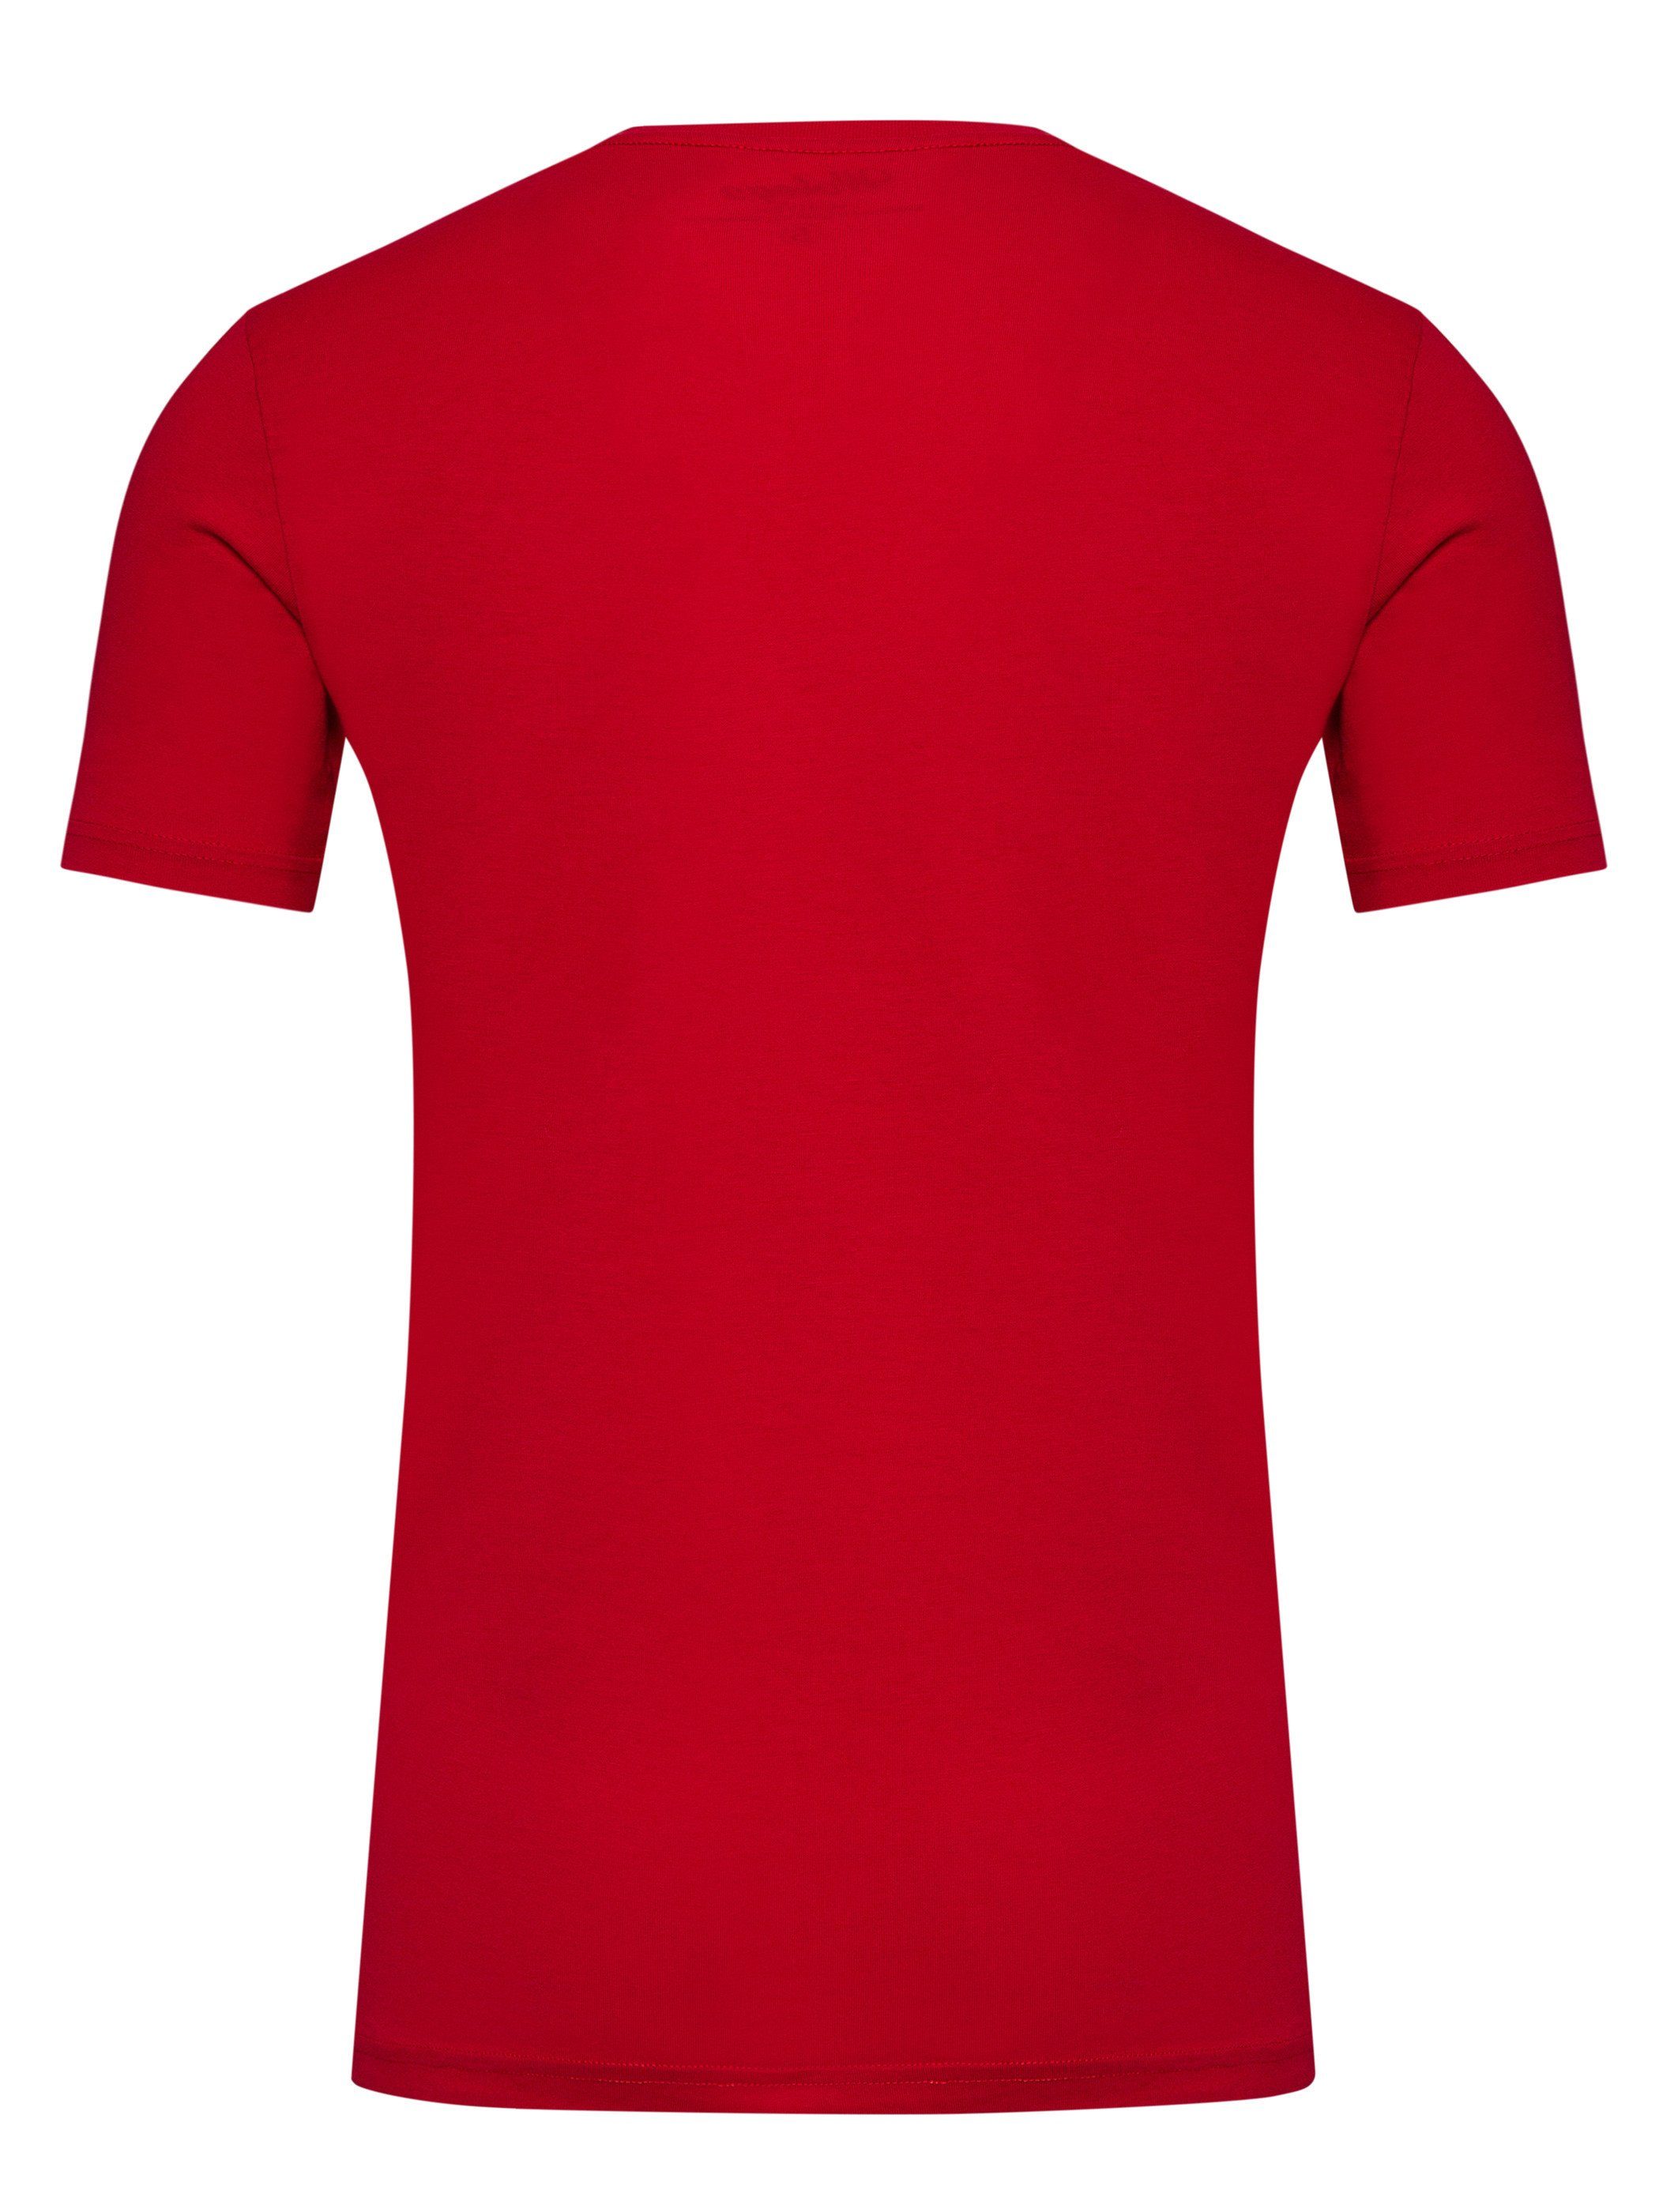 Basic Rundhalsshirt (barbados Tee cherry modernes Crew Neck Rot Alton T-Shirt WOTEGA 191757) (Set)